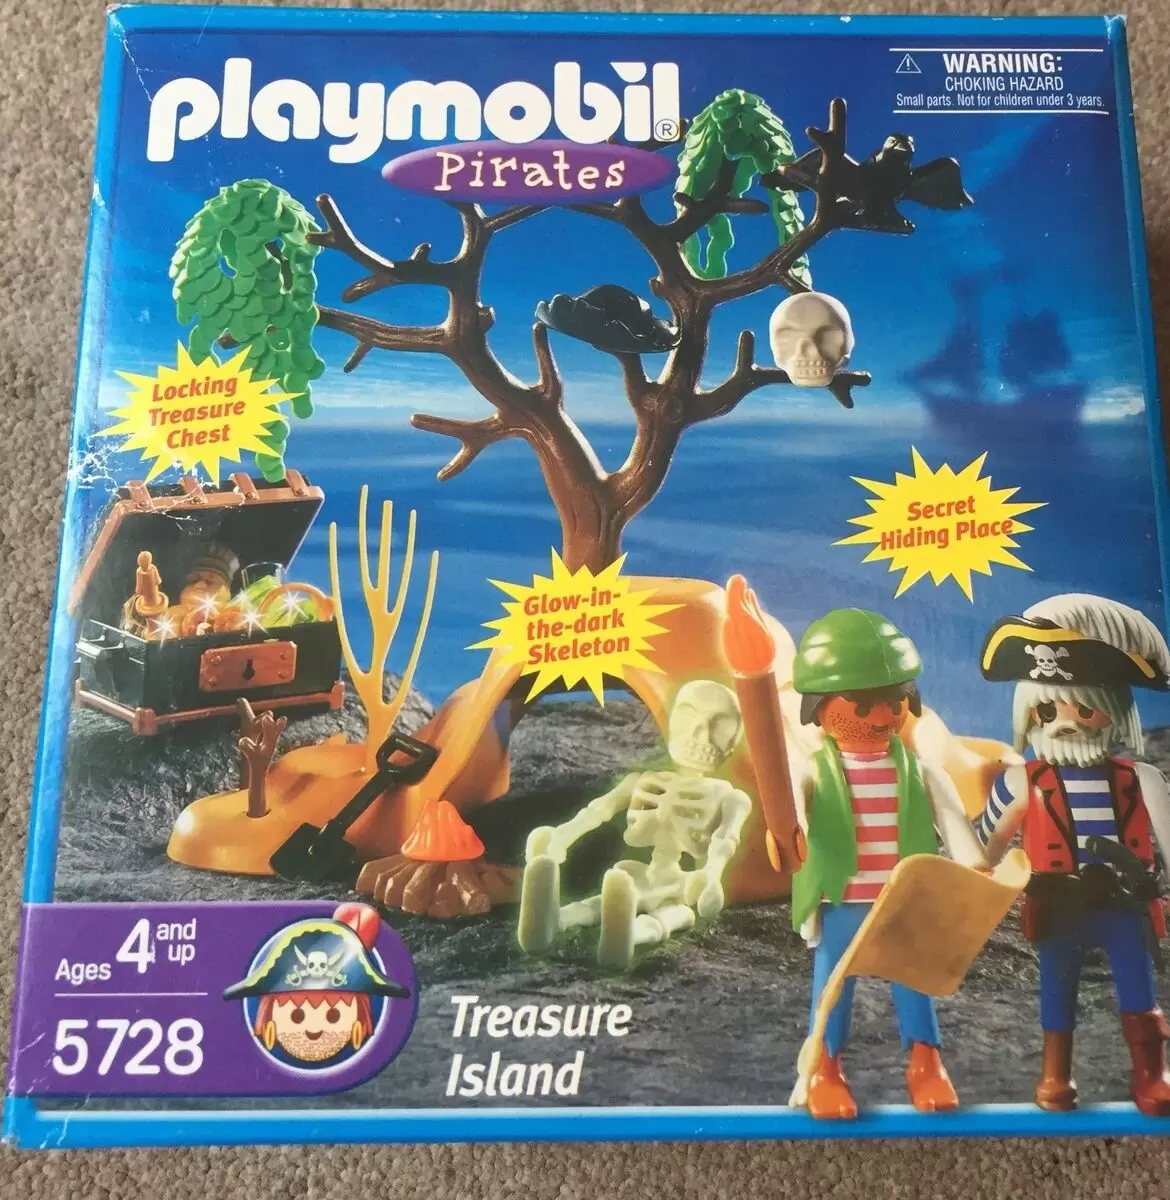 Pirate Playmobil - Treasure Island